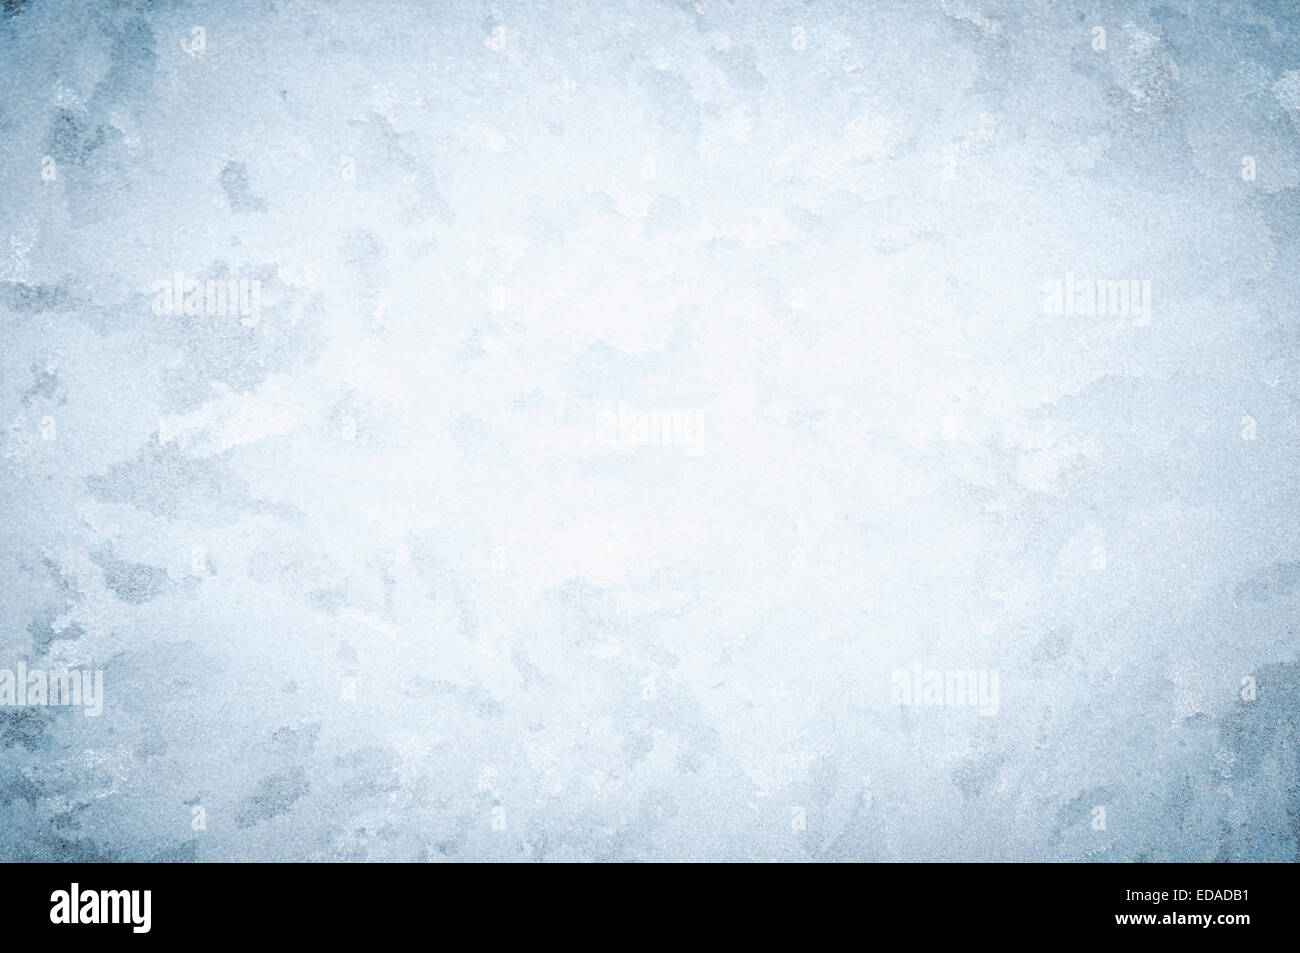 Ice crystal textured background image Stock Photo